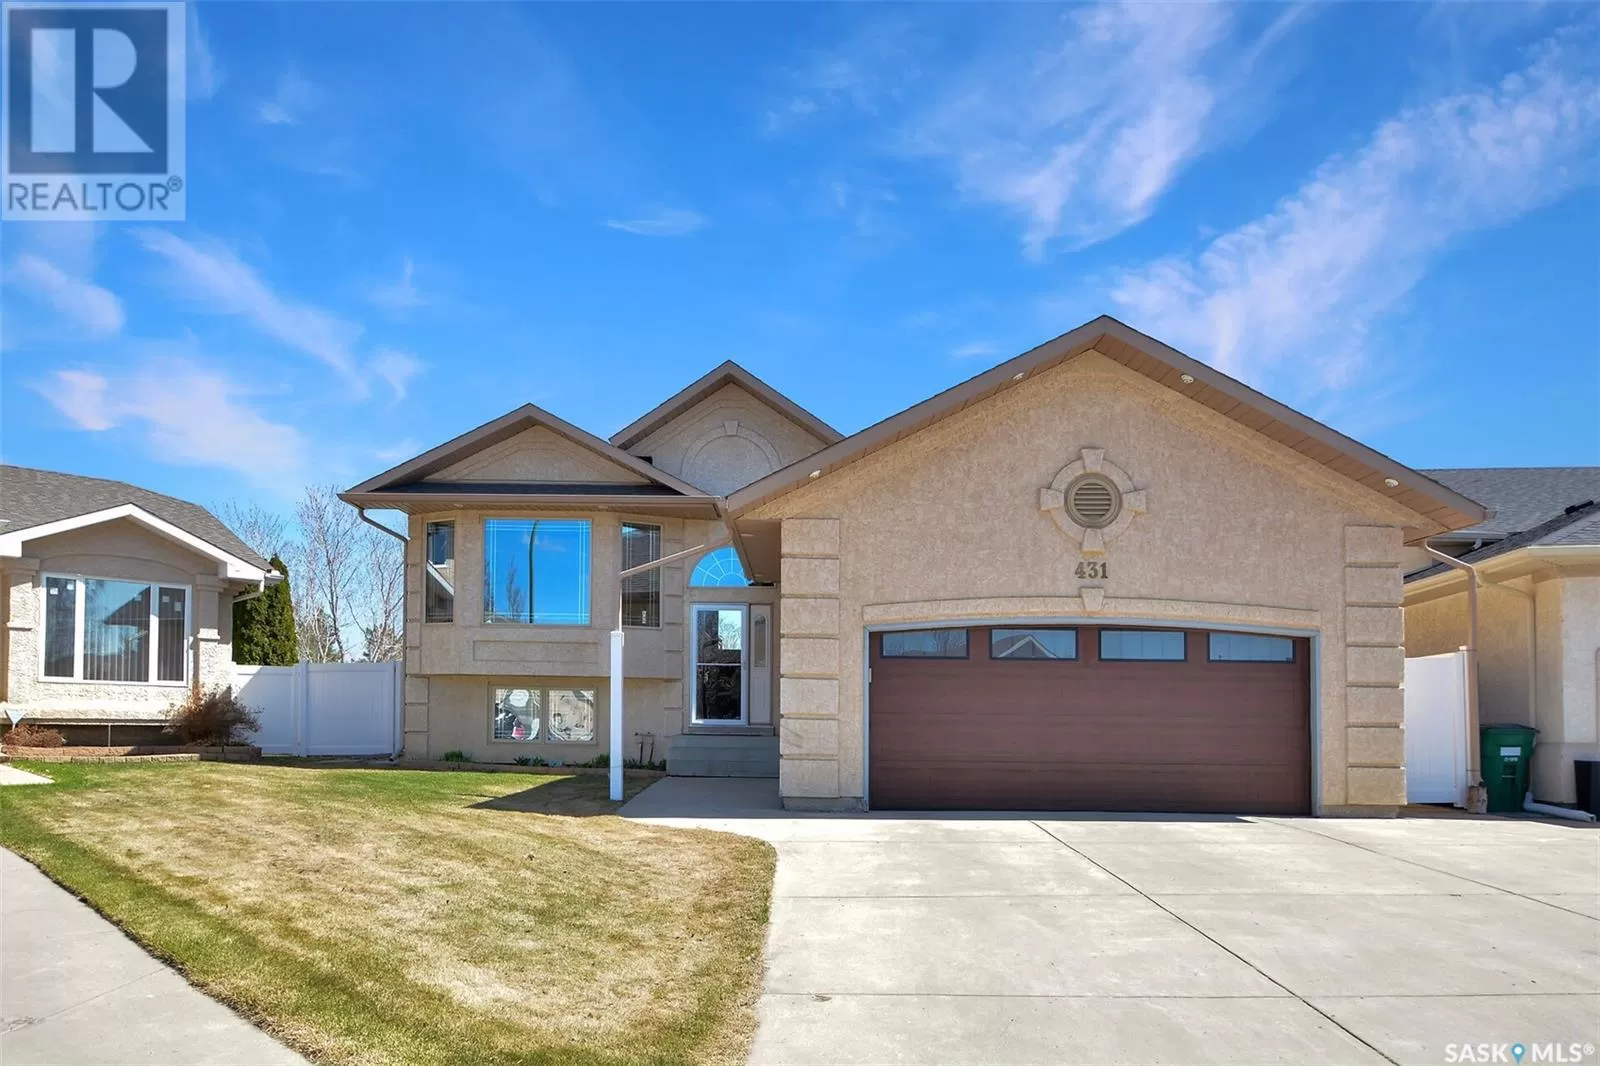 House for rent: 431 Guenter Bay, Saskatoon, Saskatchewan S7N 4P7